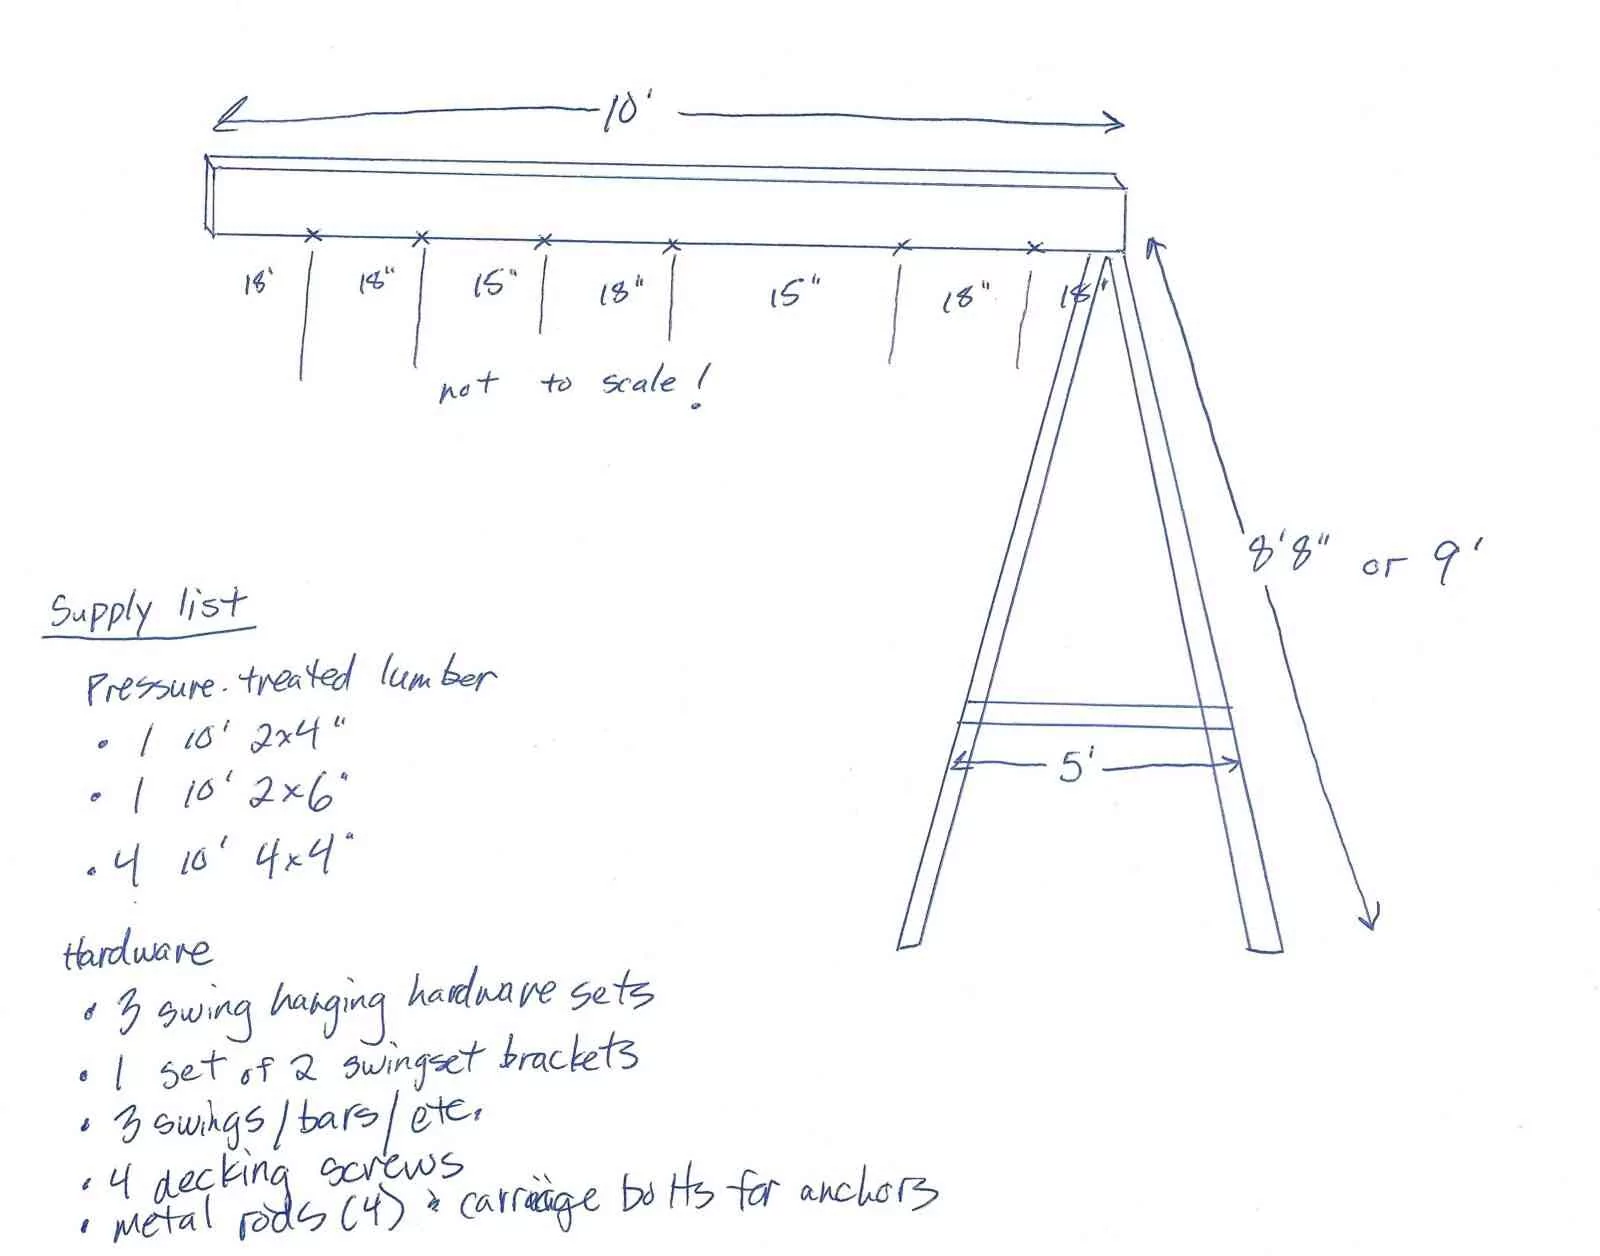 DIY wooden swing set plans free hand drawn sketch